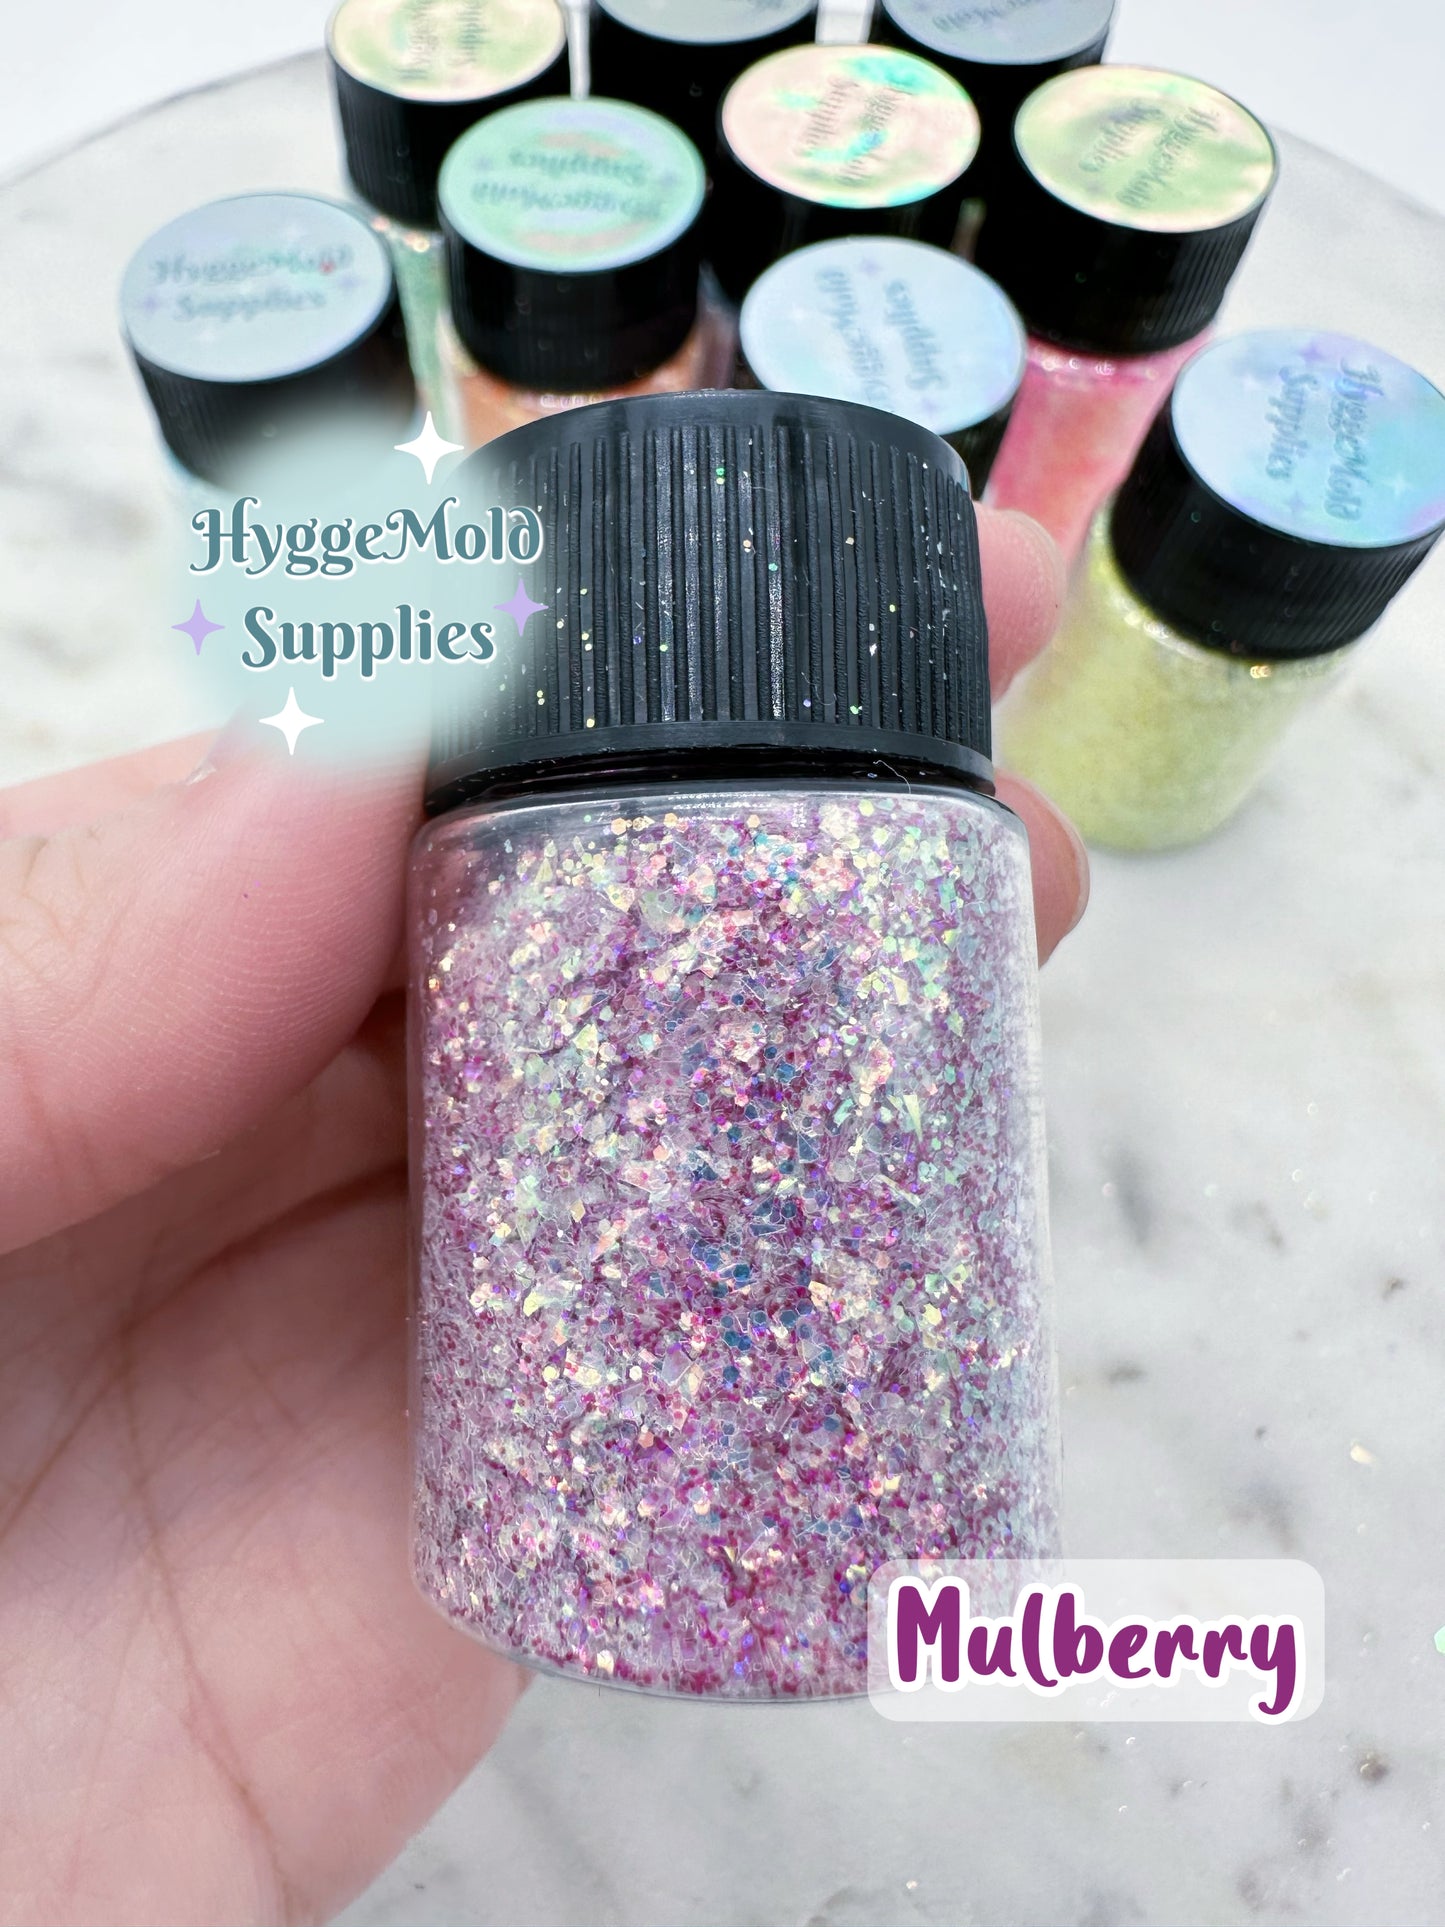 10g Bag Rainbow Tint Mylar Flake Glitter Mix